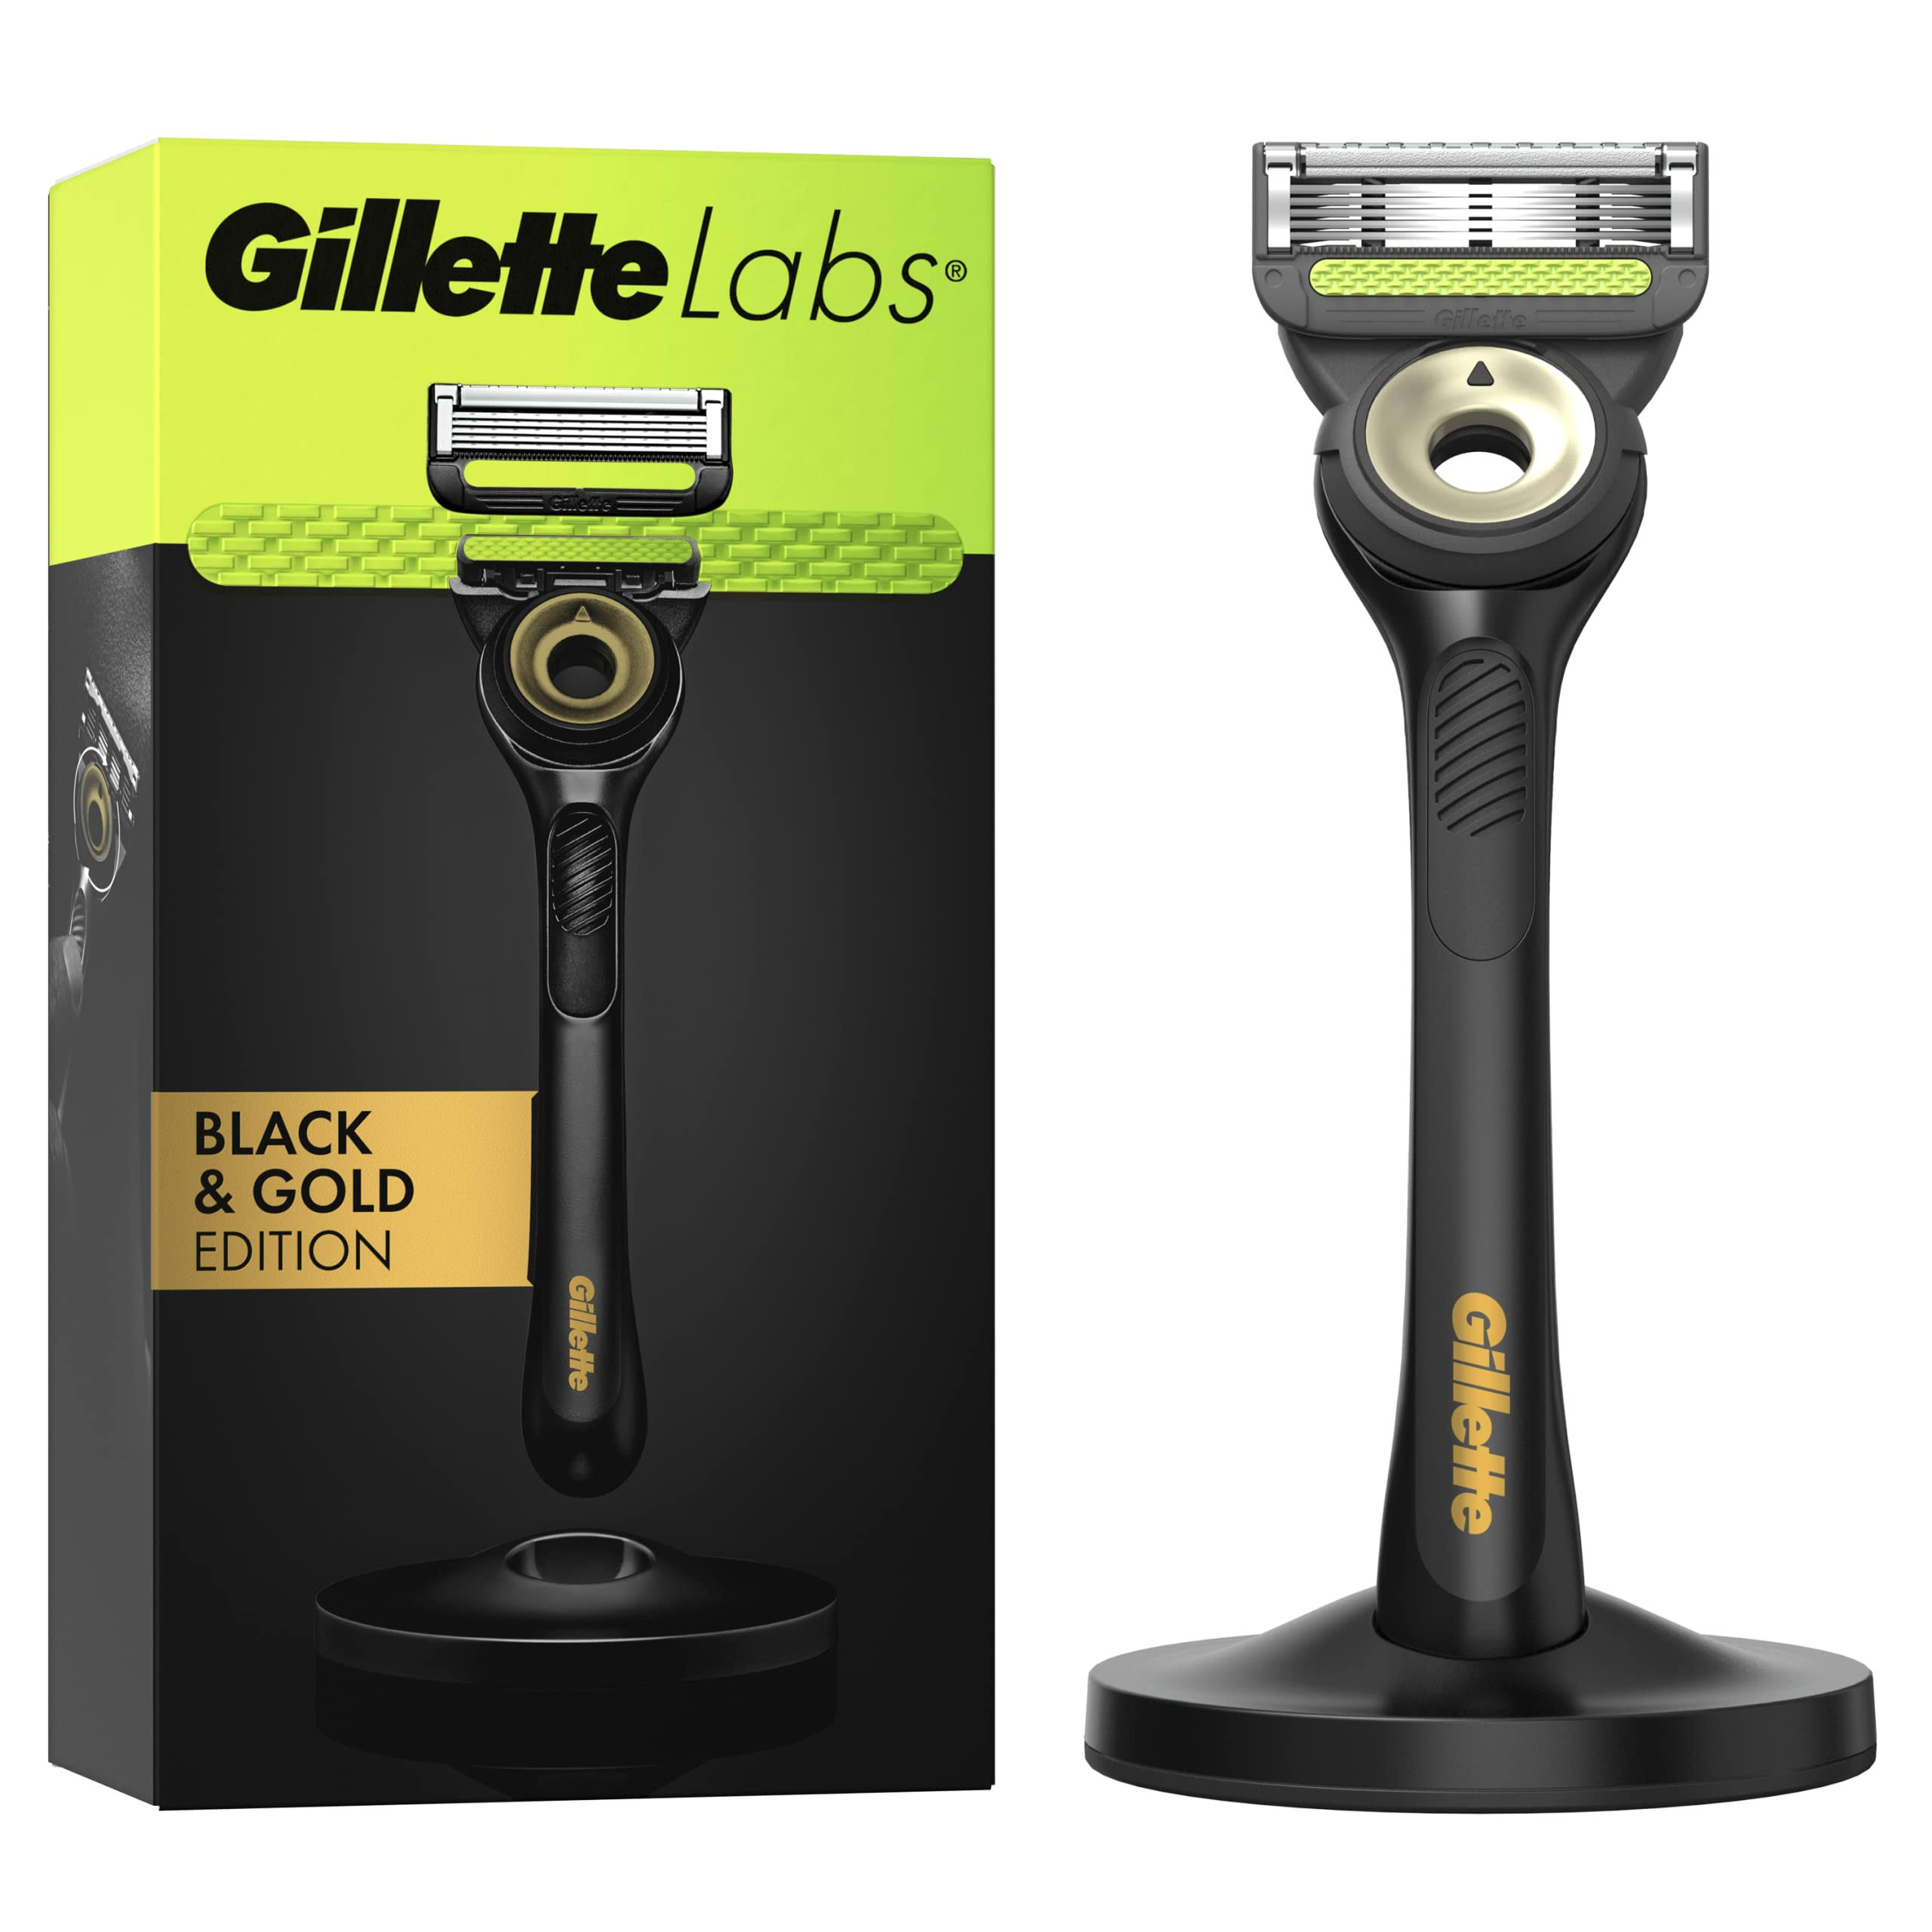 Gillette Labs Men's Razor + 1 Razor Blade Refill, with Exfoliating Bar, Includes Premium Magnetic Stand, Black & Gold Edition